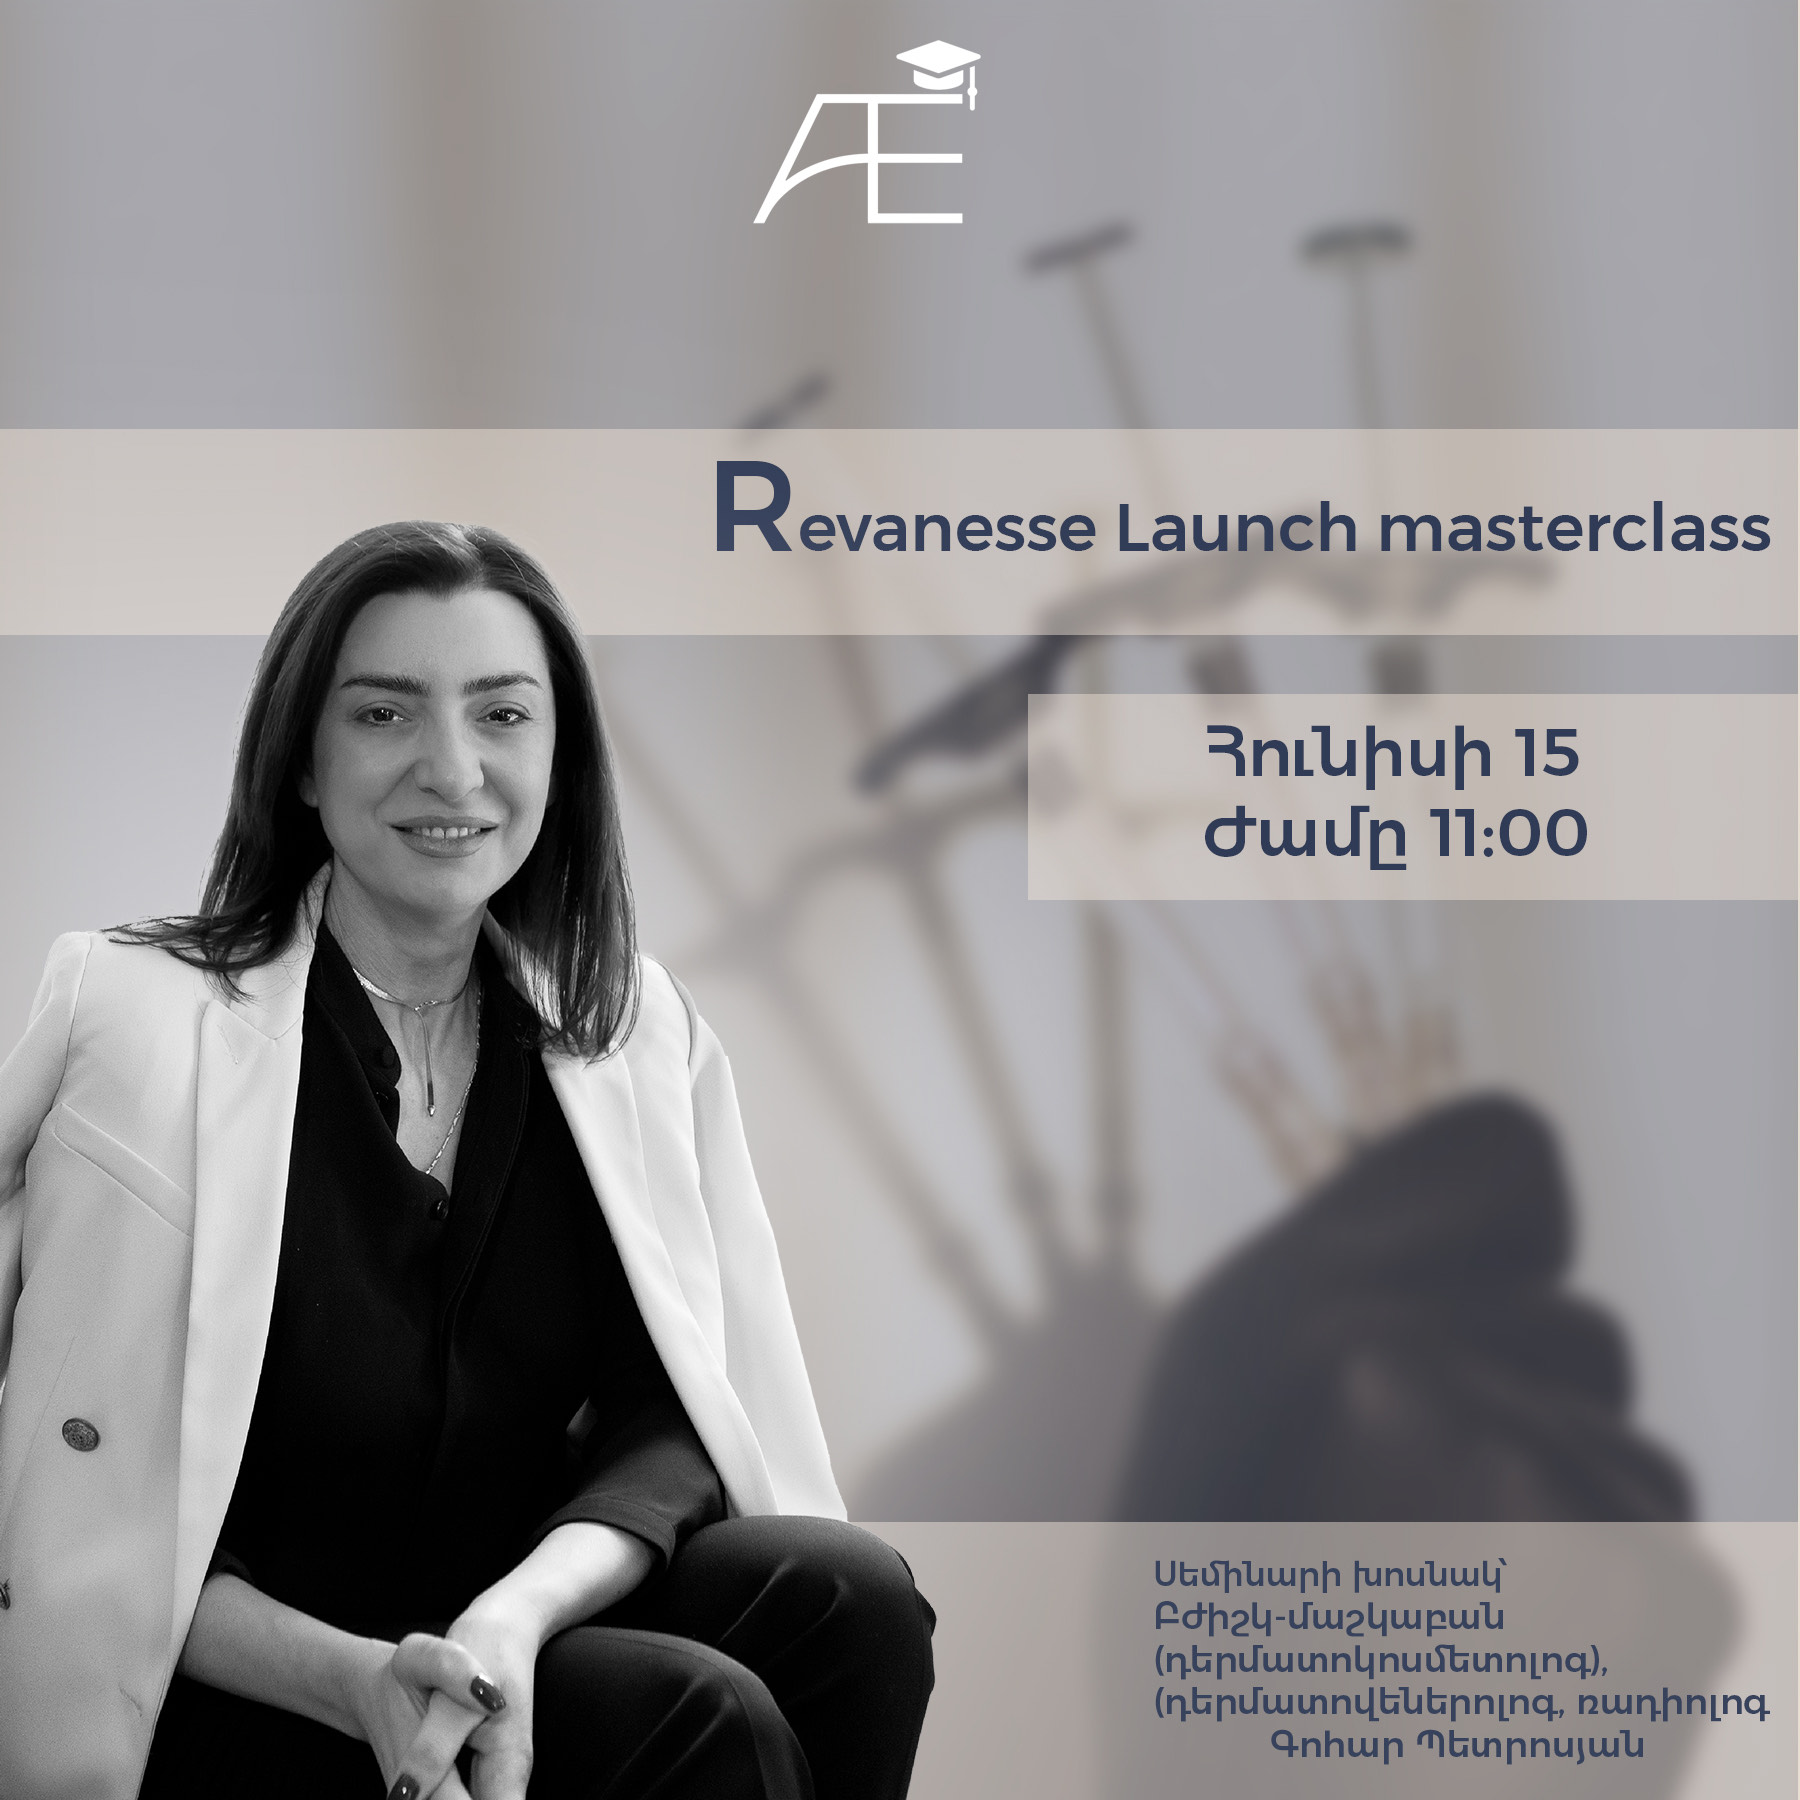 Revanesse launch masterclass